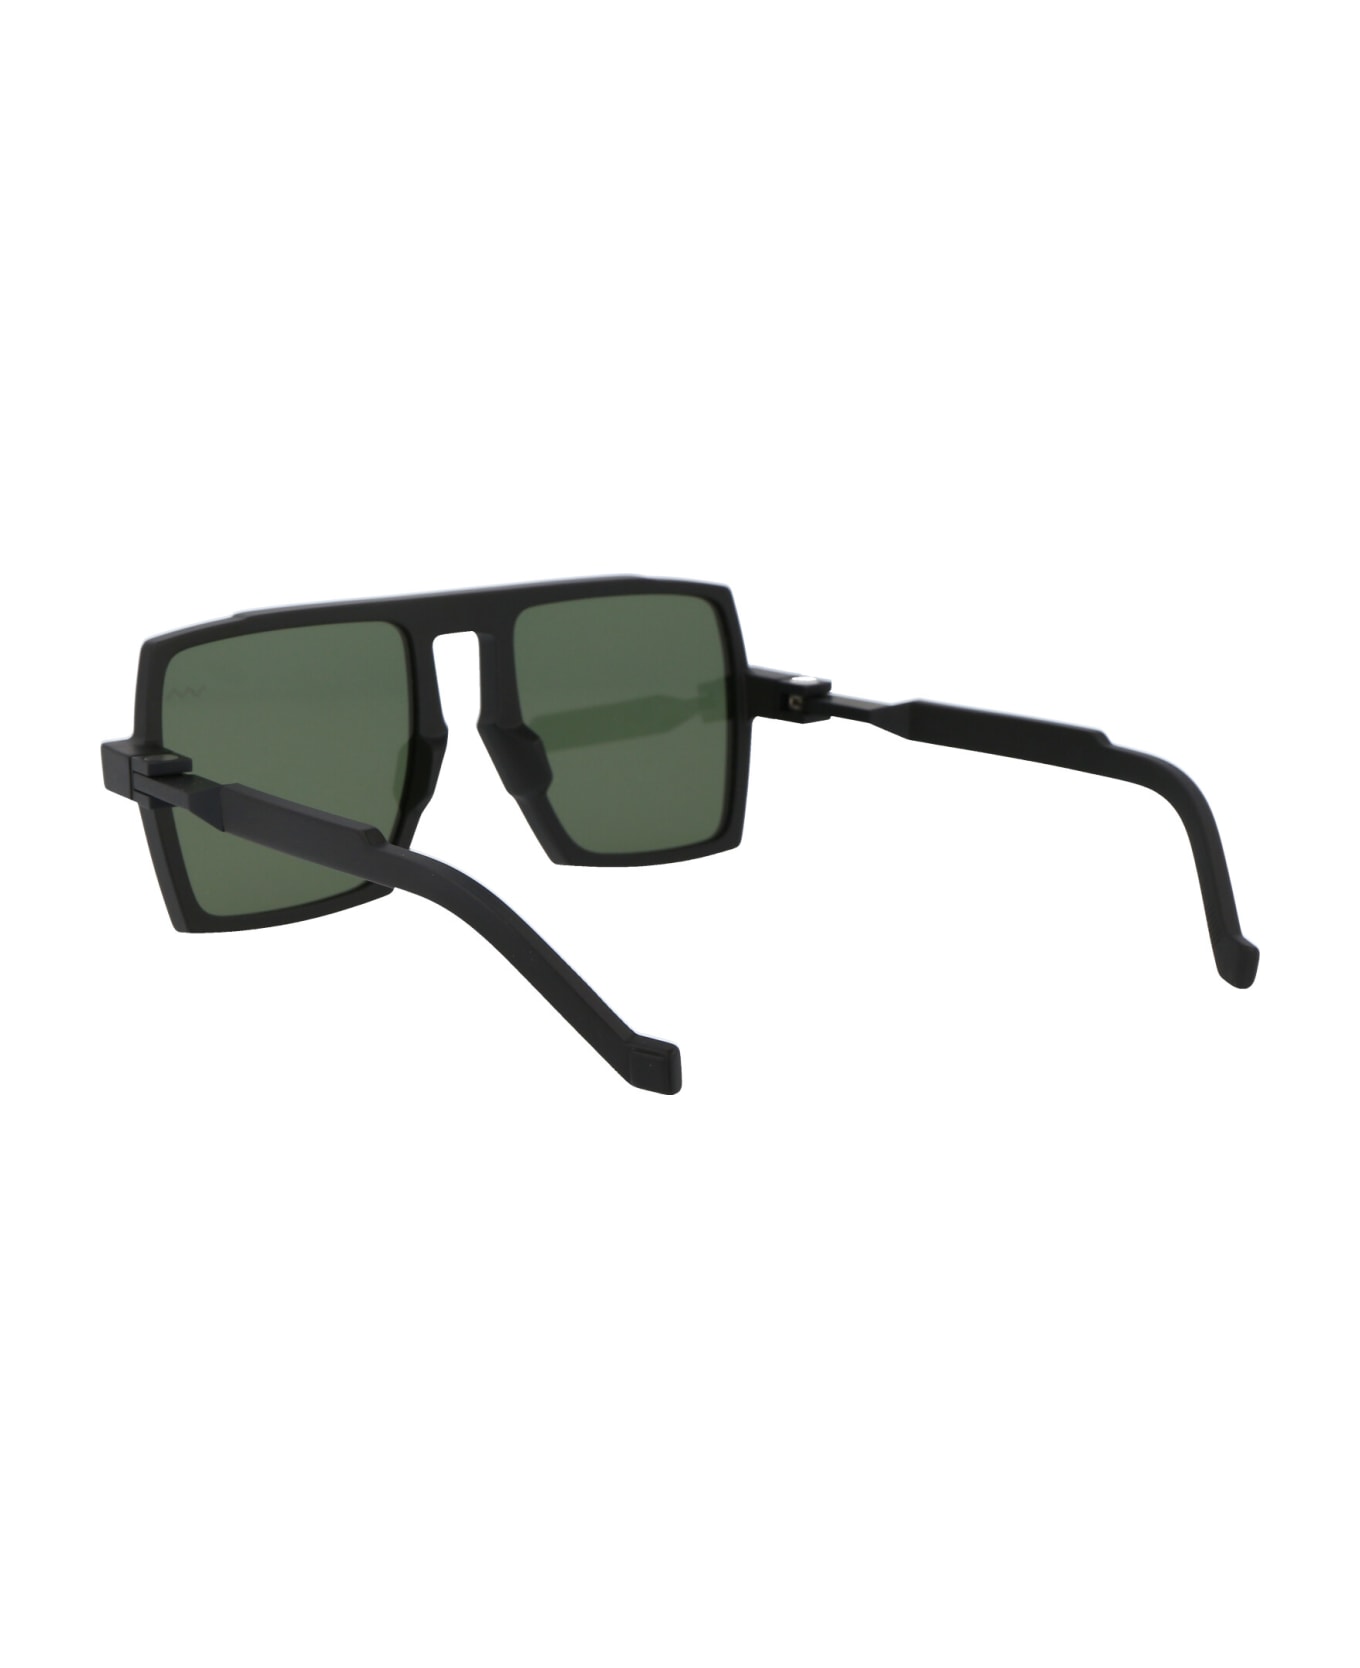 VAVA Bl0026 Sunglasses - MATTE BLACK|BLACK FLEX HINGES|GREEN LENSES